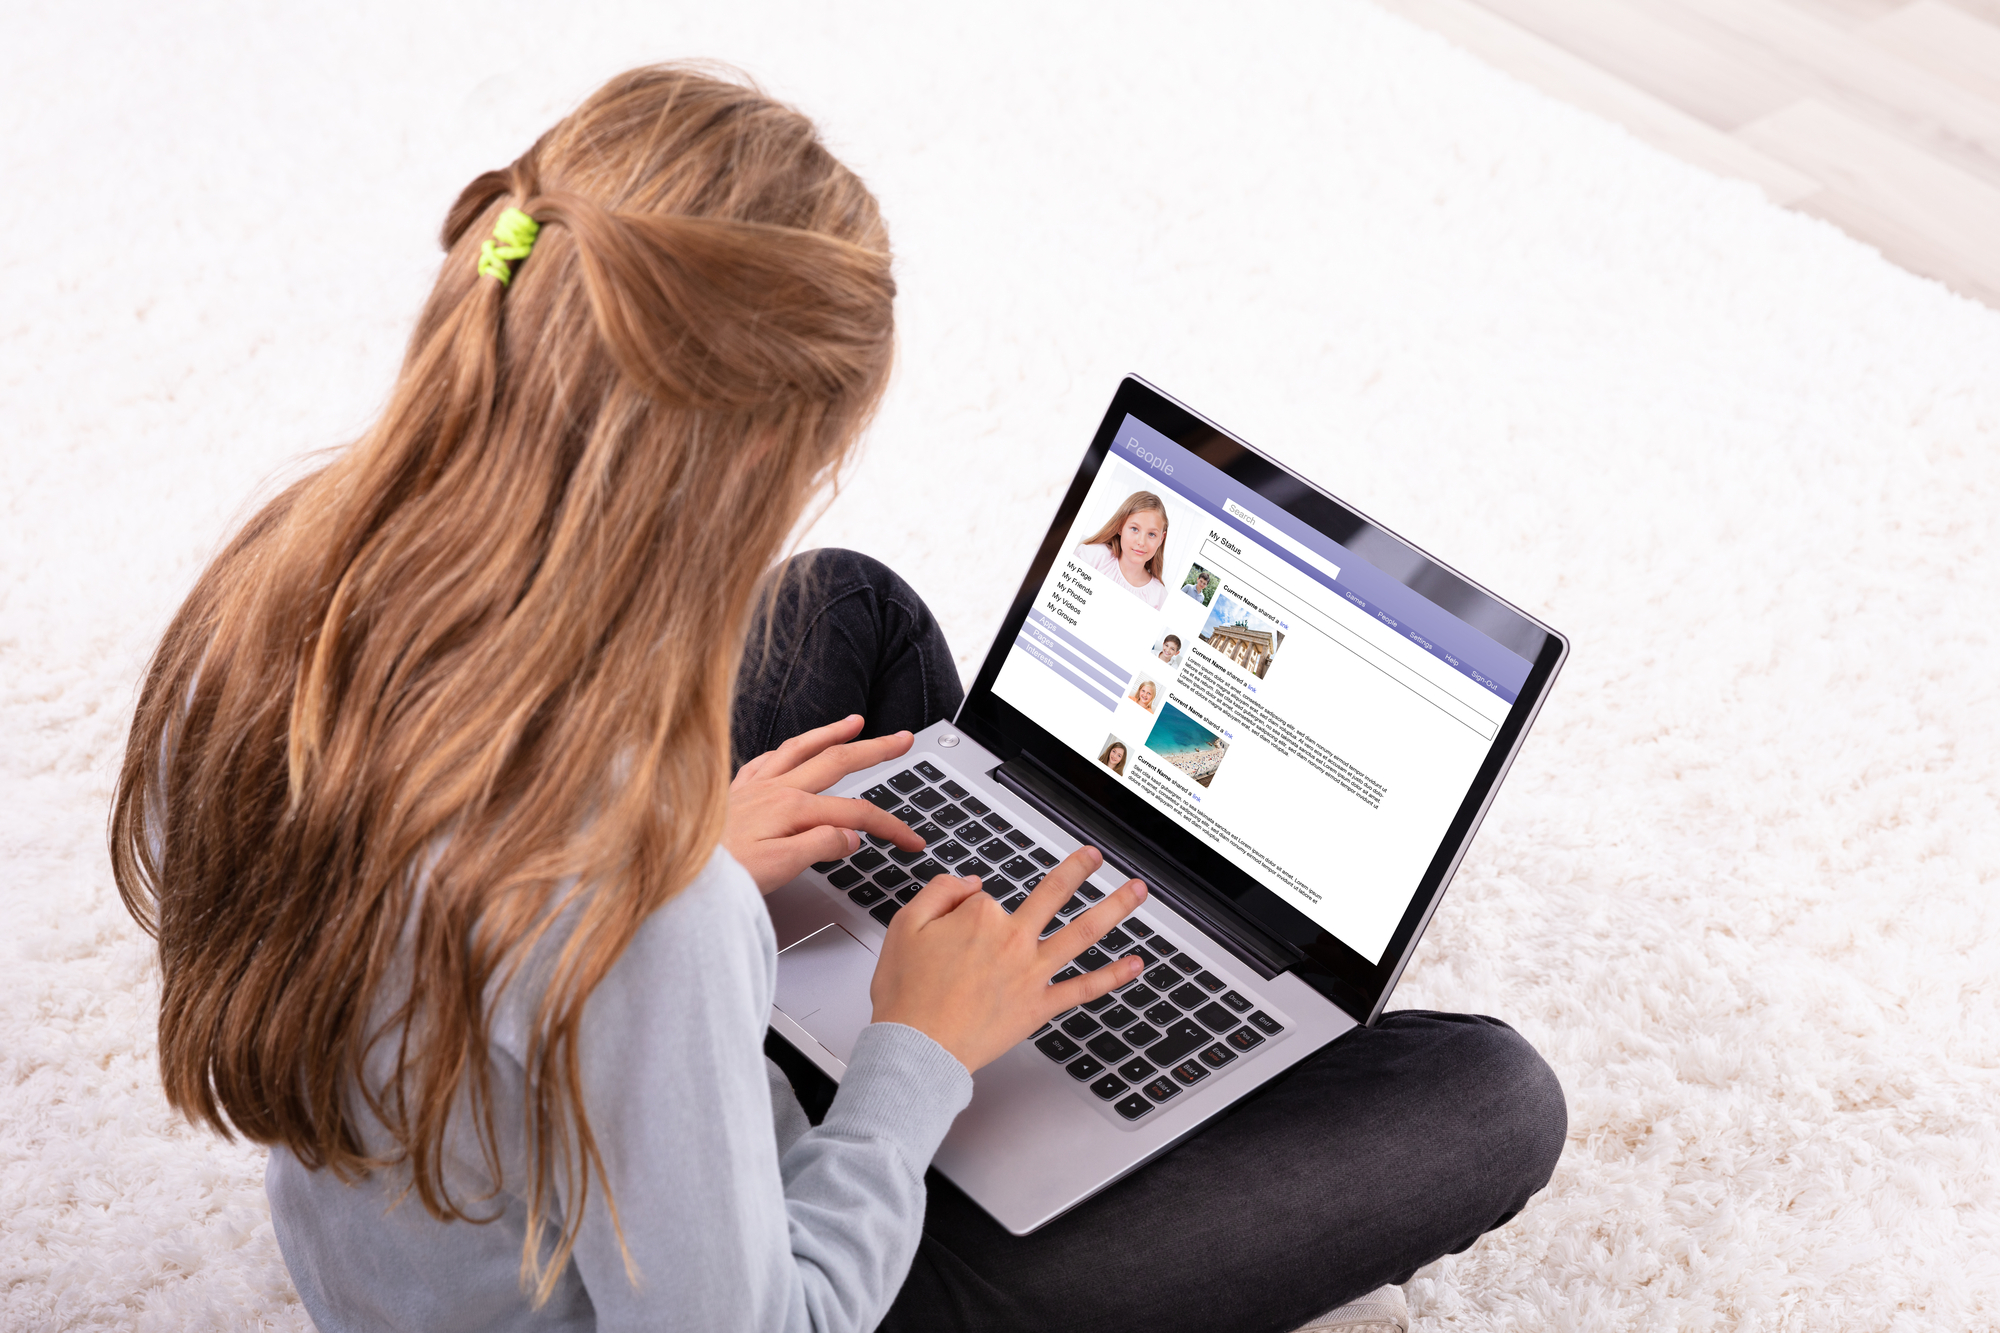 Girl using a social media service on a laptop